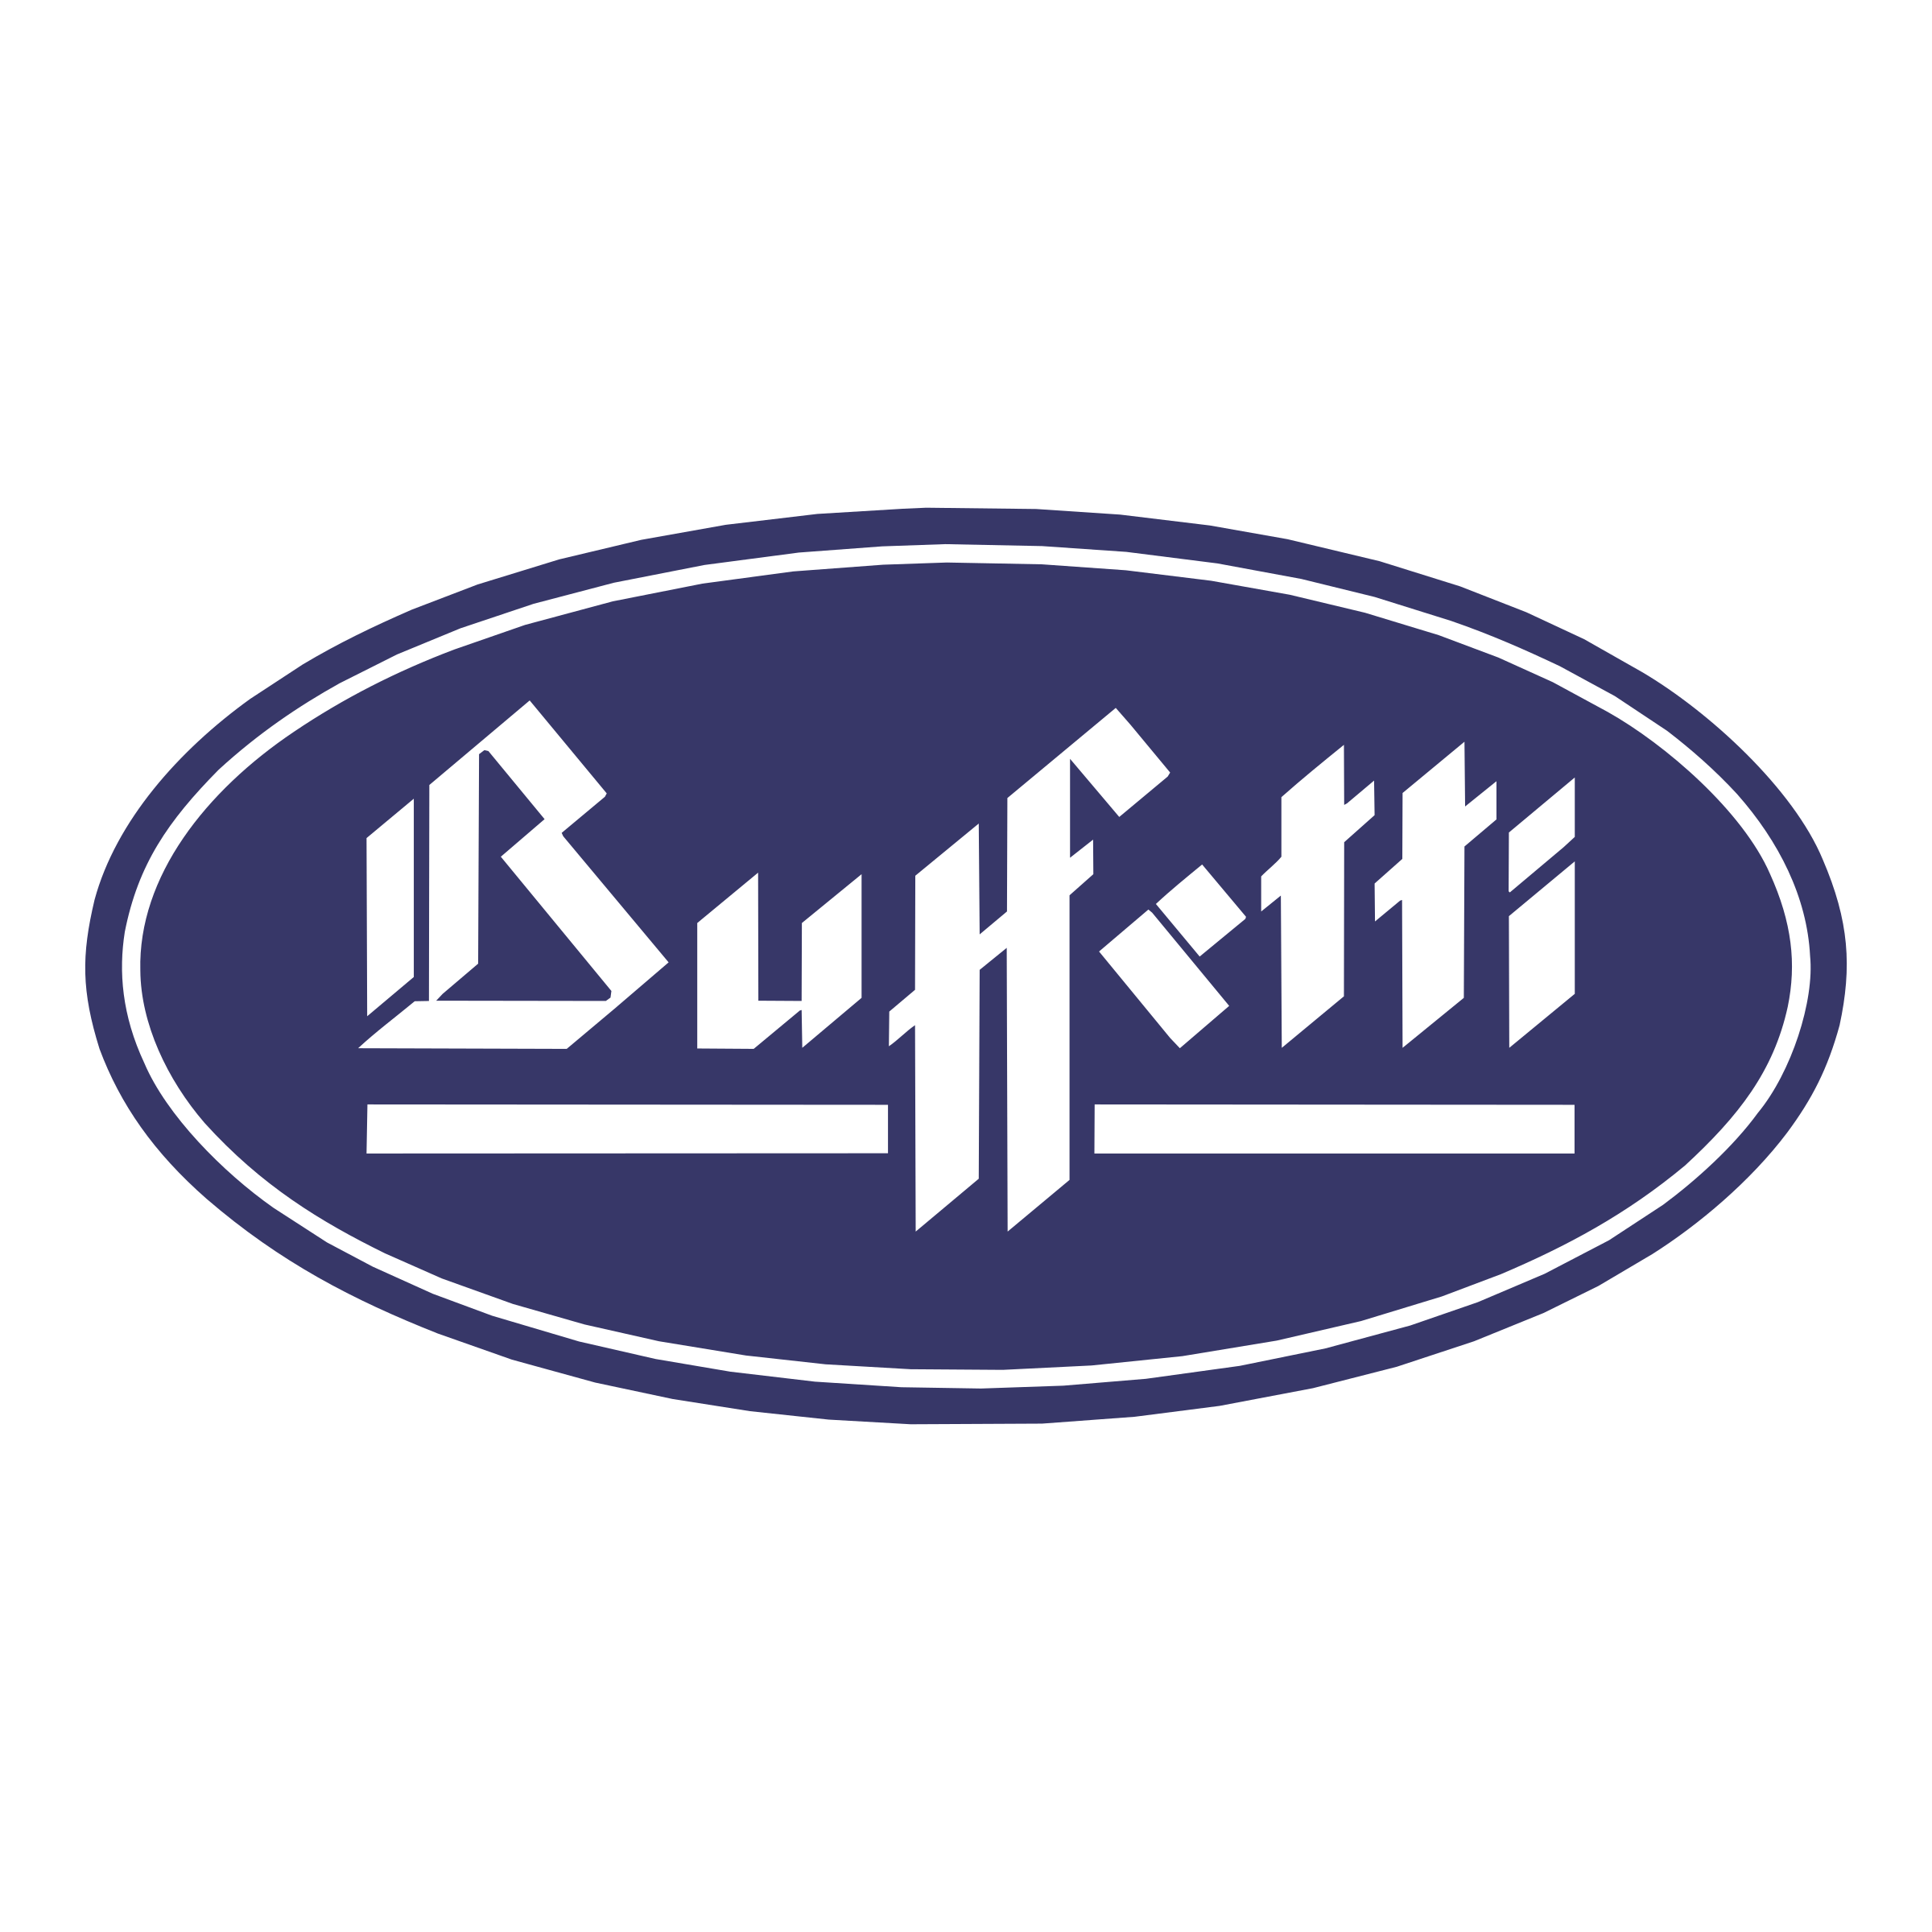 buffetti-logo-png-transparent